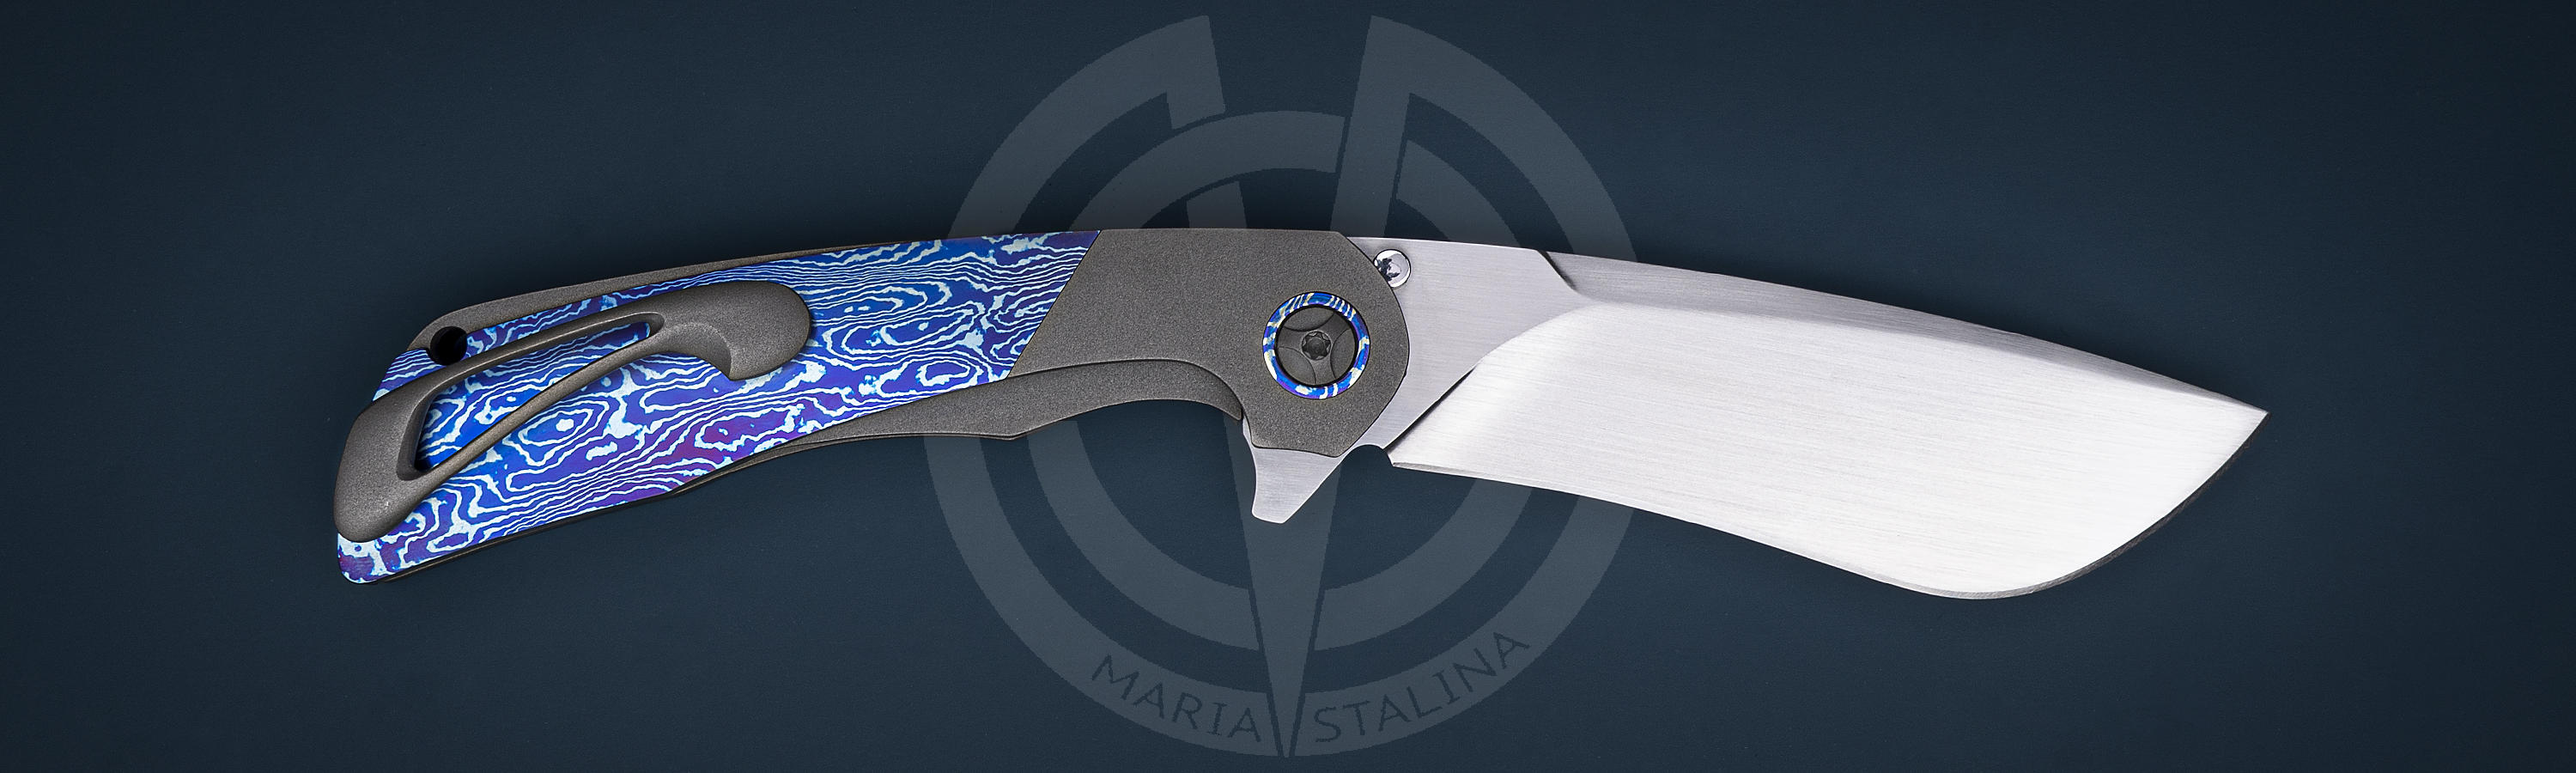 Steel CPM S35VN Blade of Sabotage knife